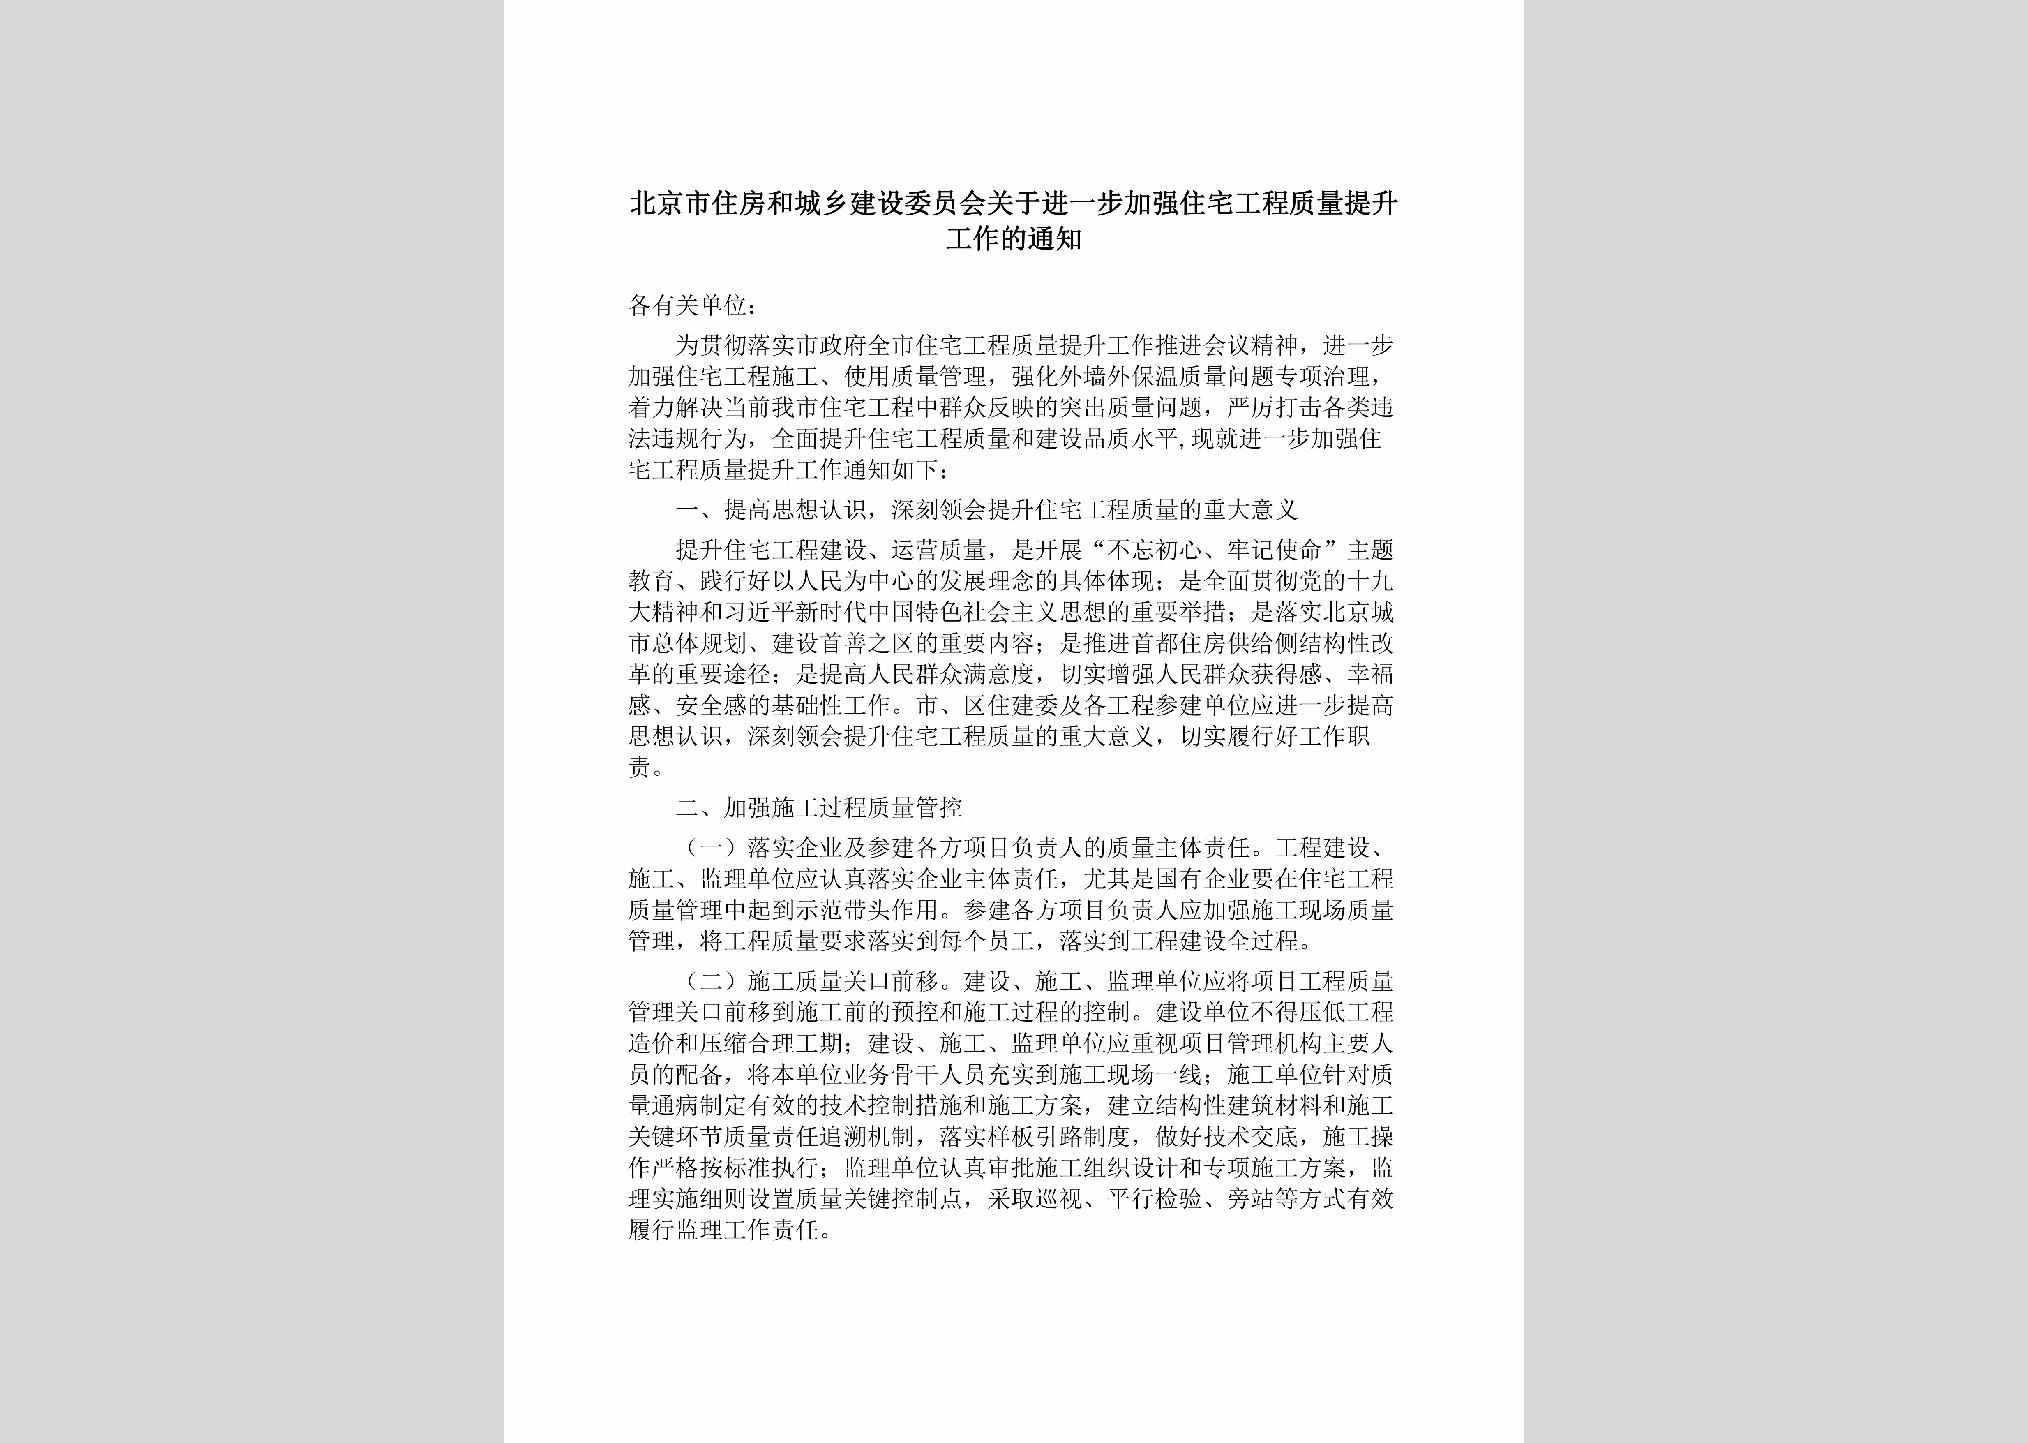 BJ-JQZZGCZL-2019：北京市住房和城乡建设委员会关于进一步加强住宅工程质量提升工作的通知